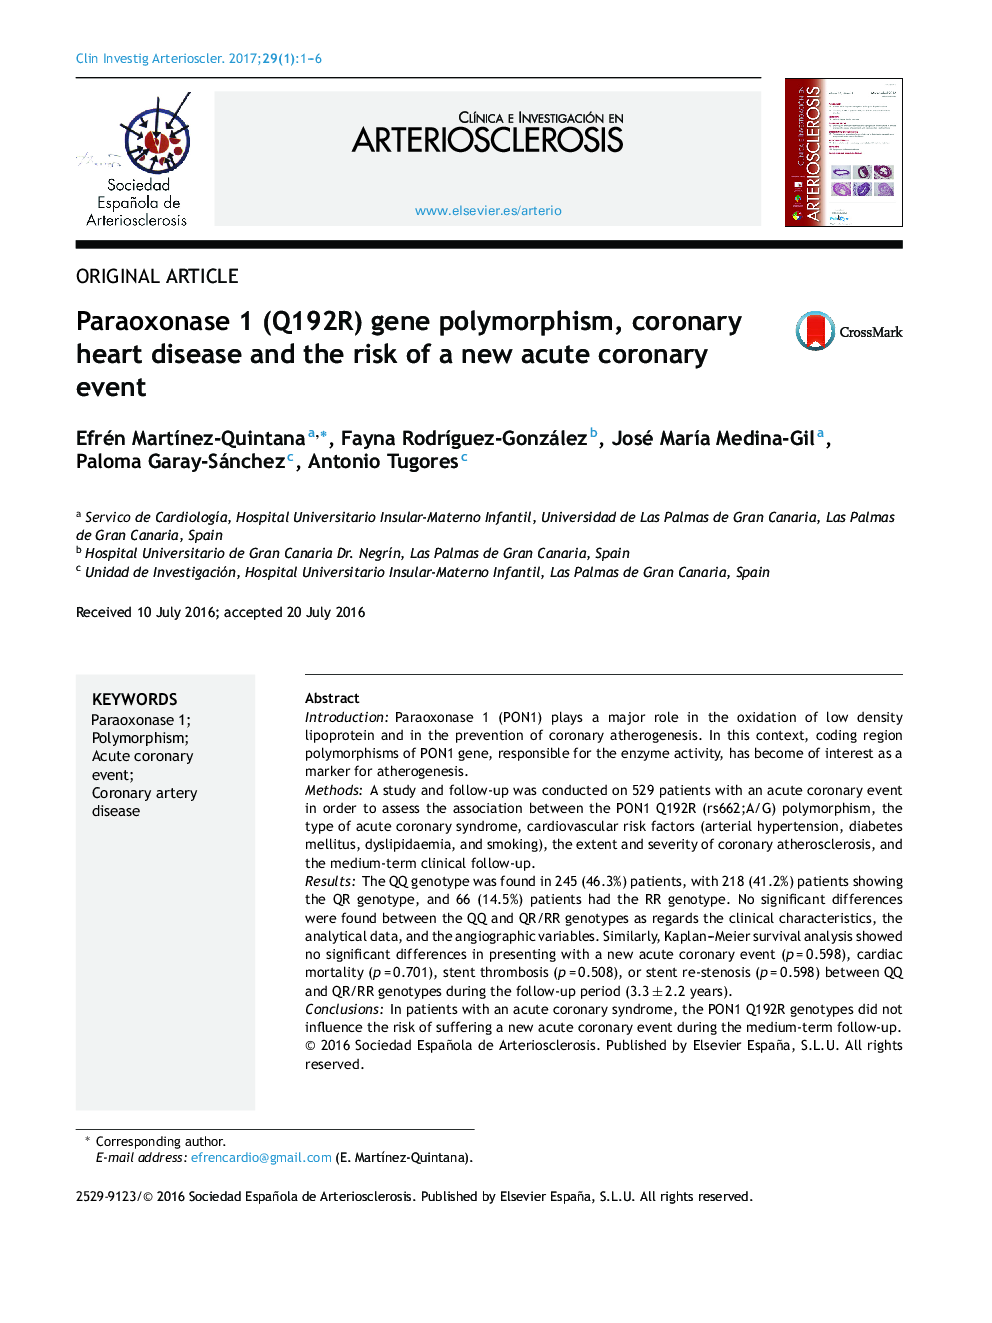 Paraoxonase 1 (Q192R) gene polymorphism, coronary heart disease and the risk of a new acute coronary event